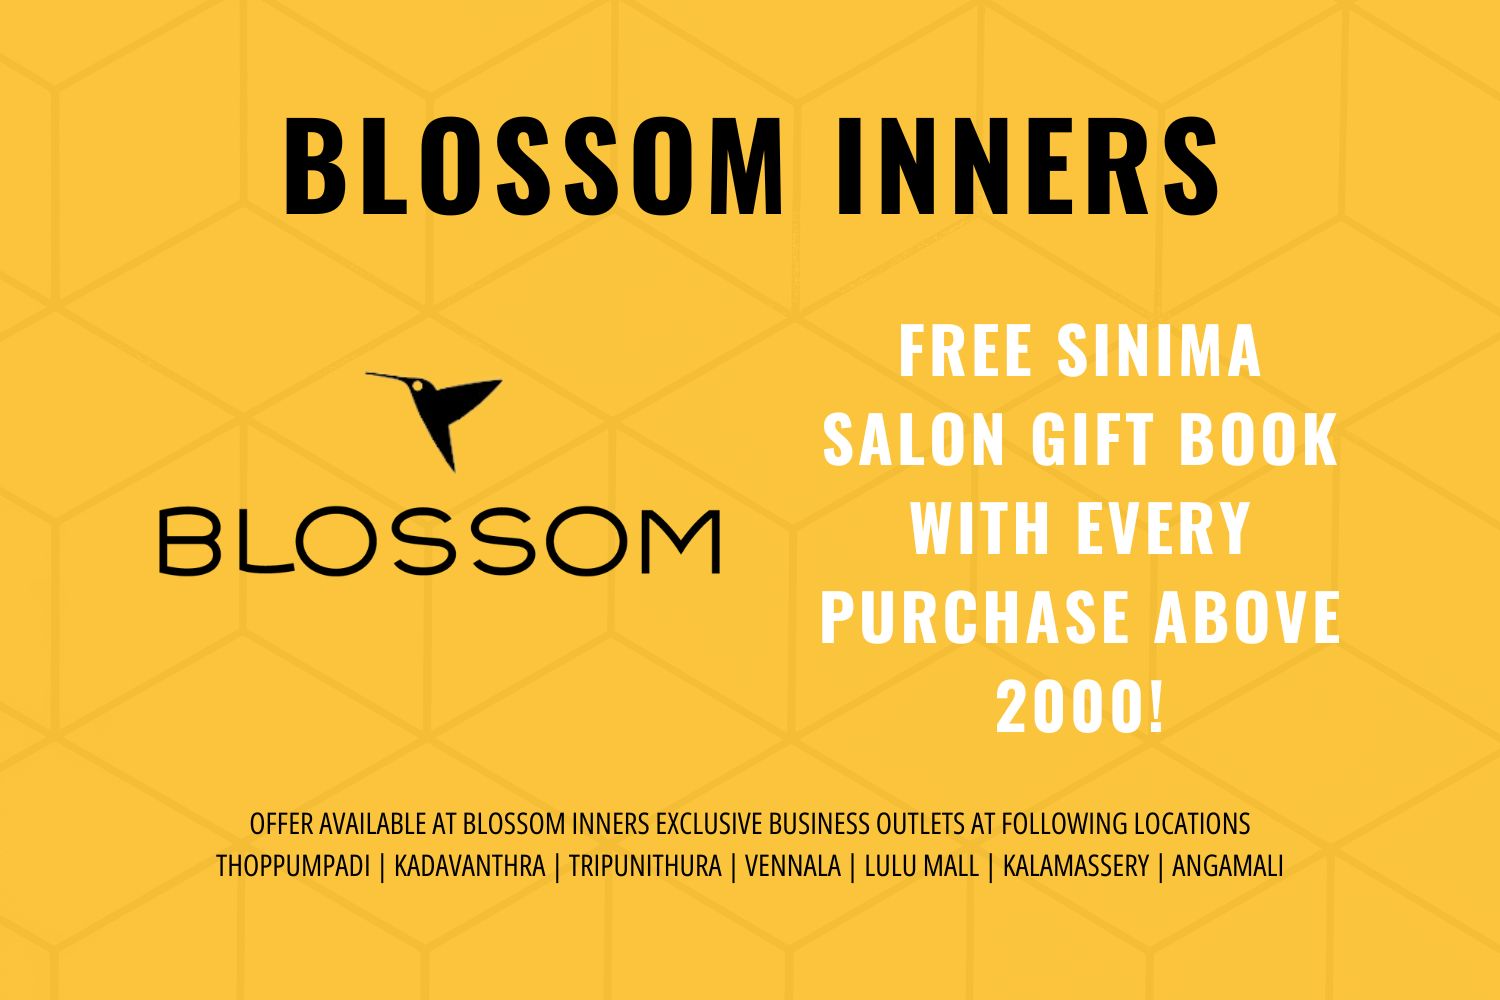 Blossom Inners partnership with SINIMA Salon Kochi